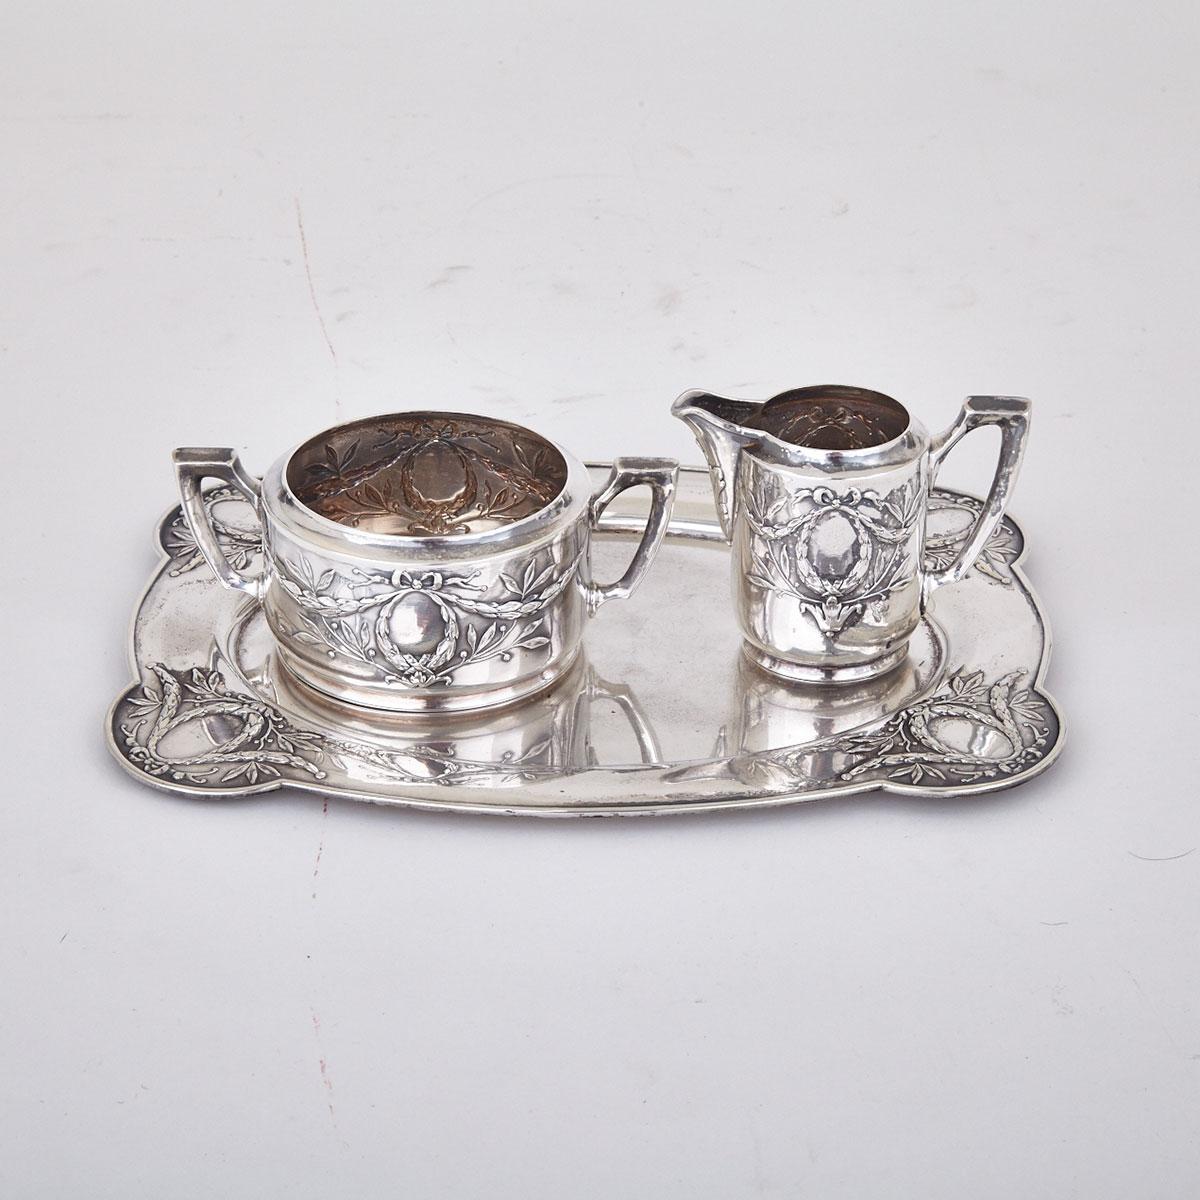 Continental Silver Cream Jug, Sugar Basin and Tray, probably German, 20th century